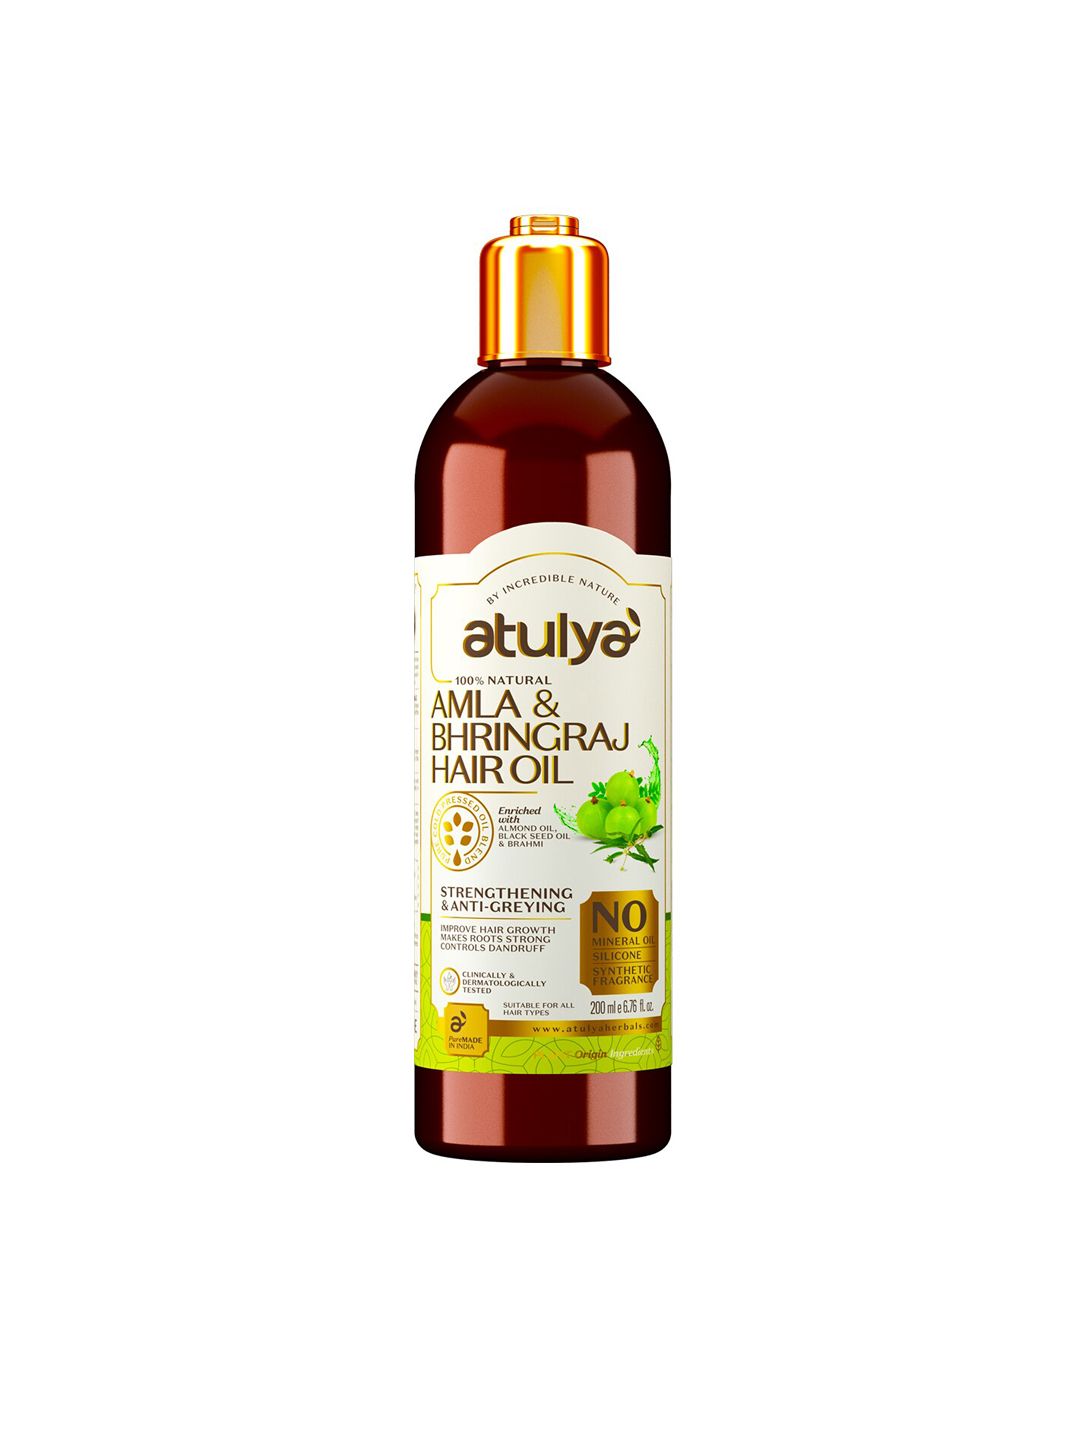 Atulya Amla & Bhringraj Hair Oil 200 ml Price in India